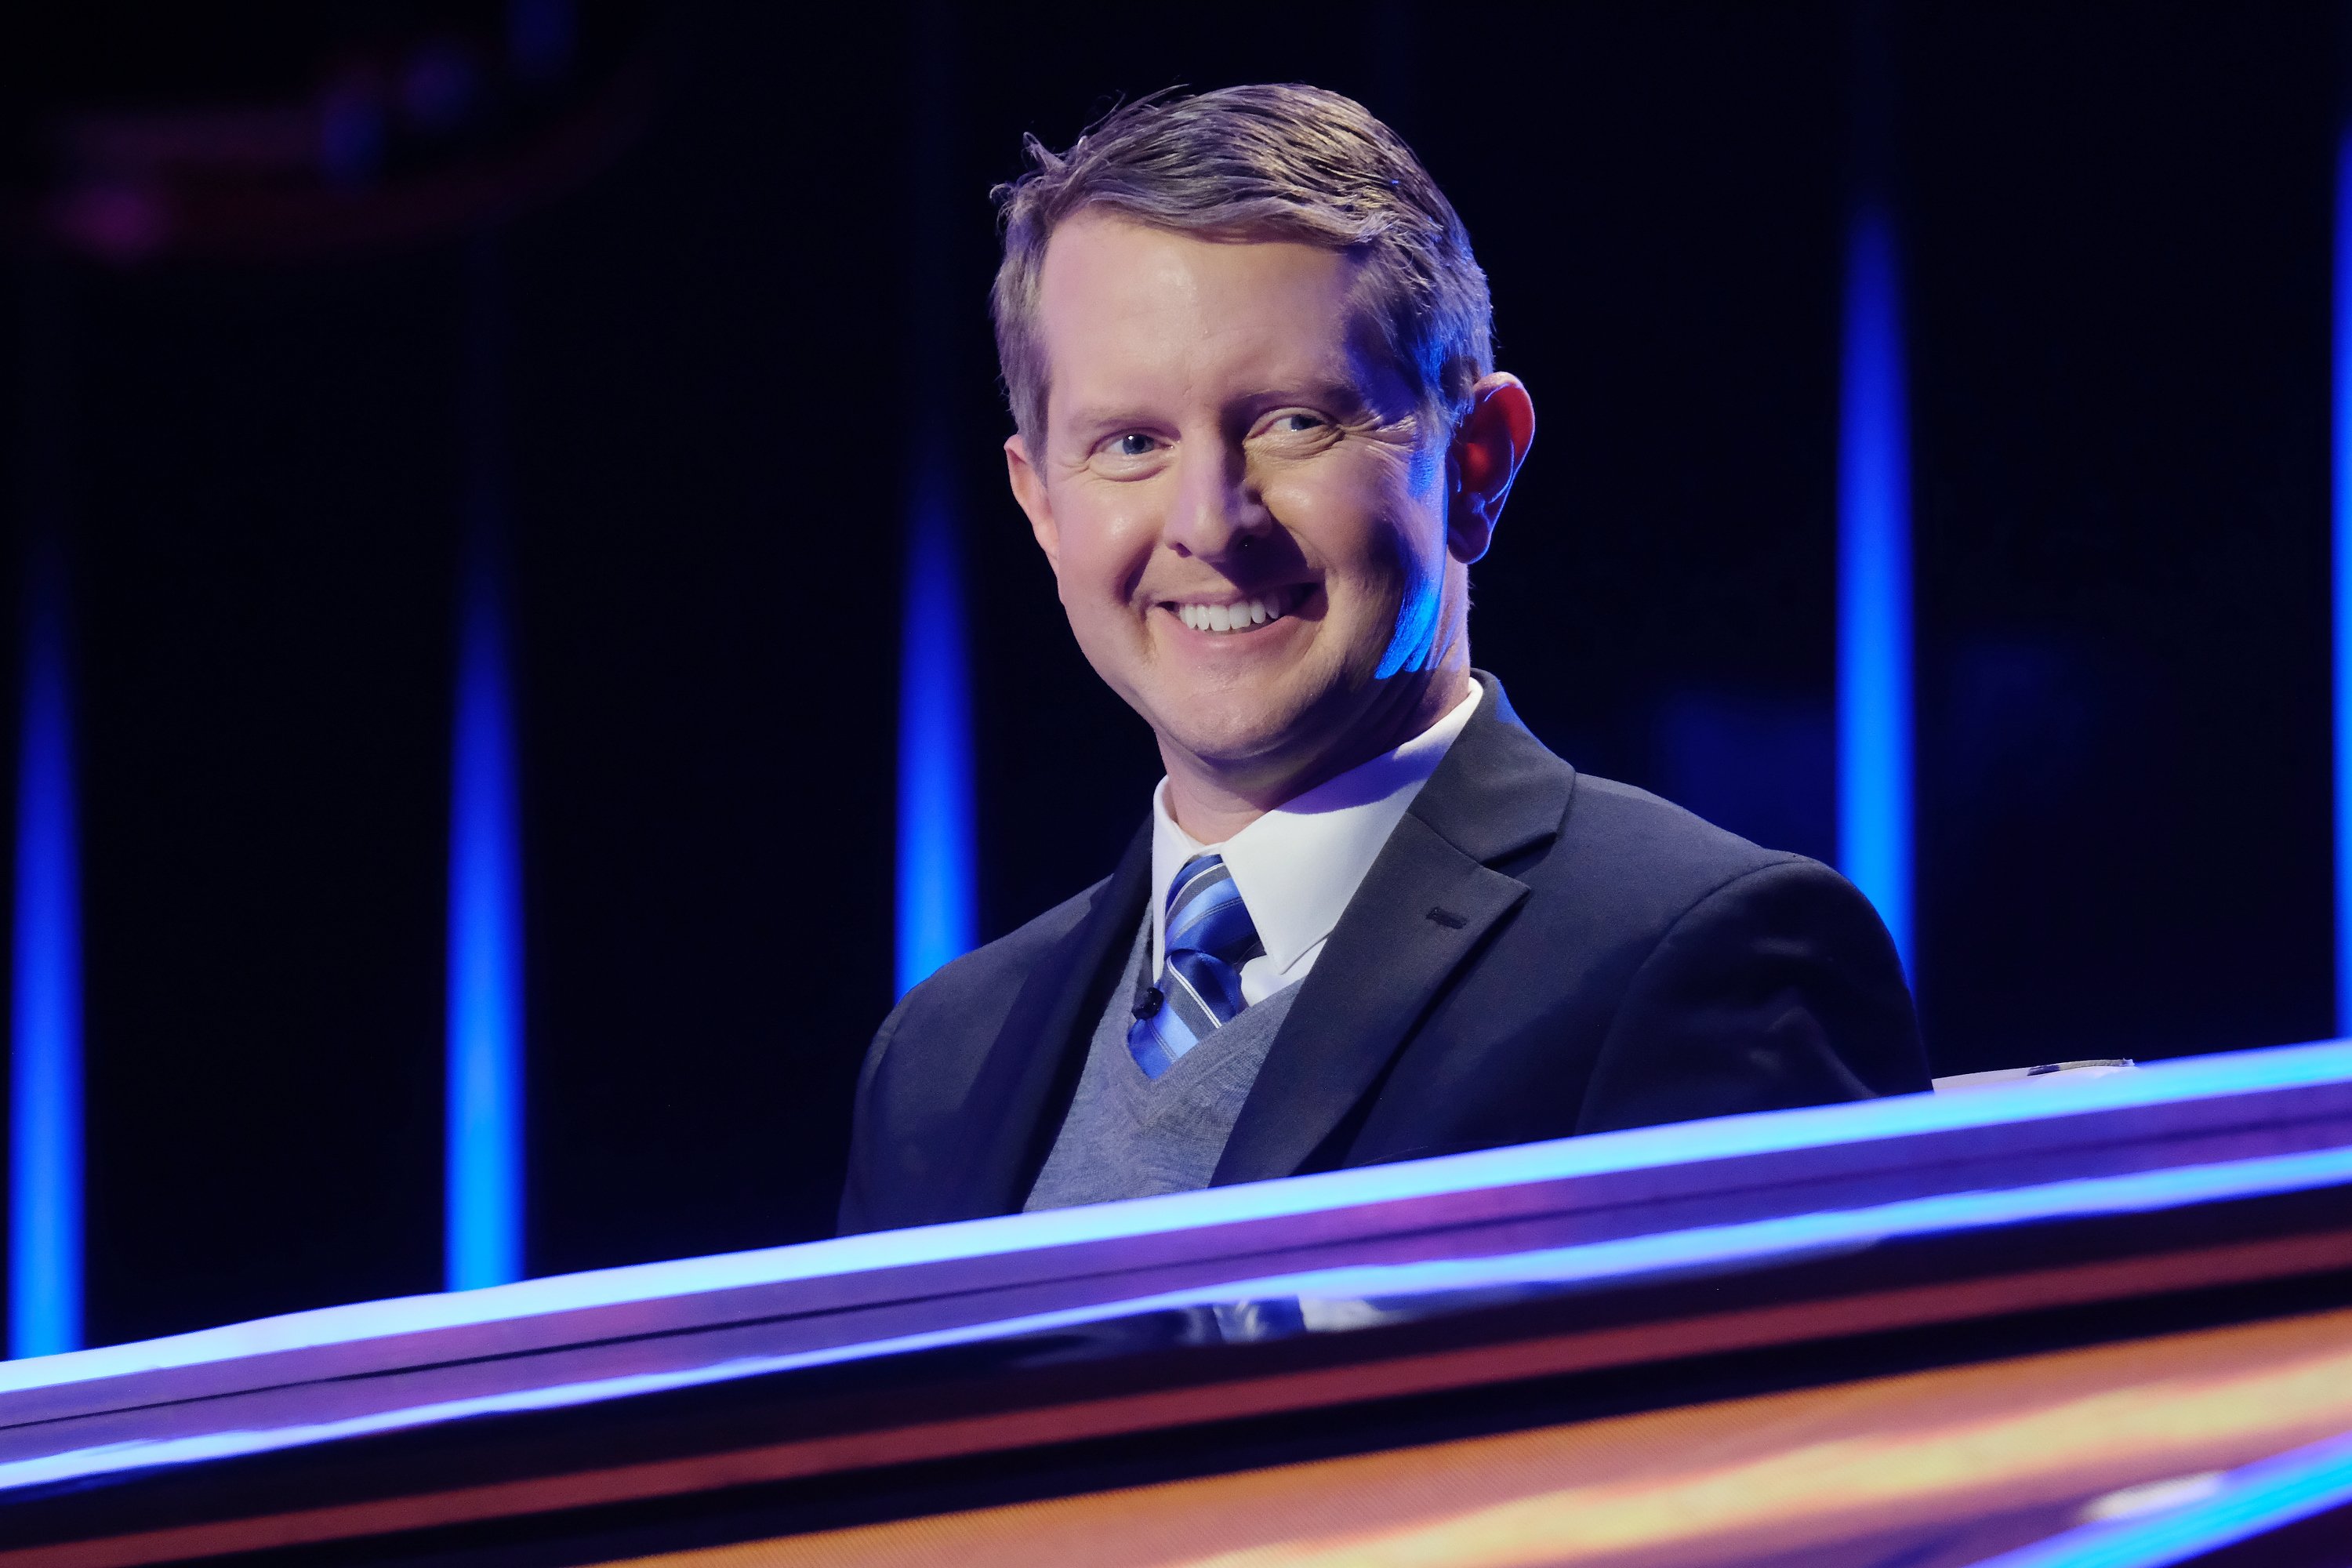 'Jeopardy!' GOAT Ken Jennings on 'The Chase' 